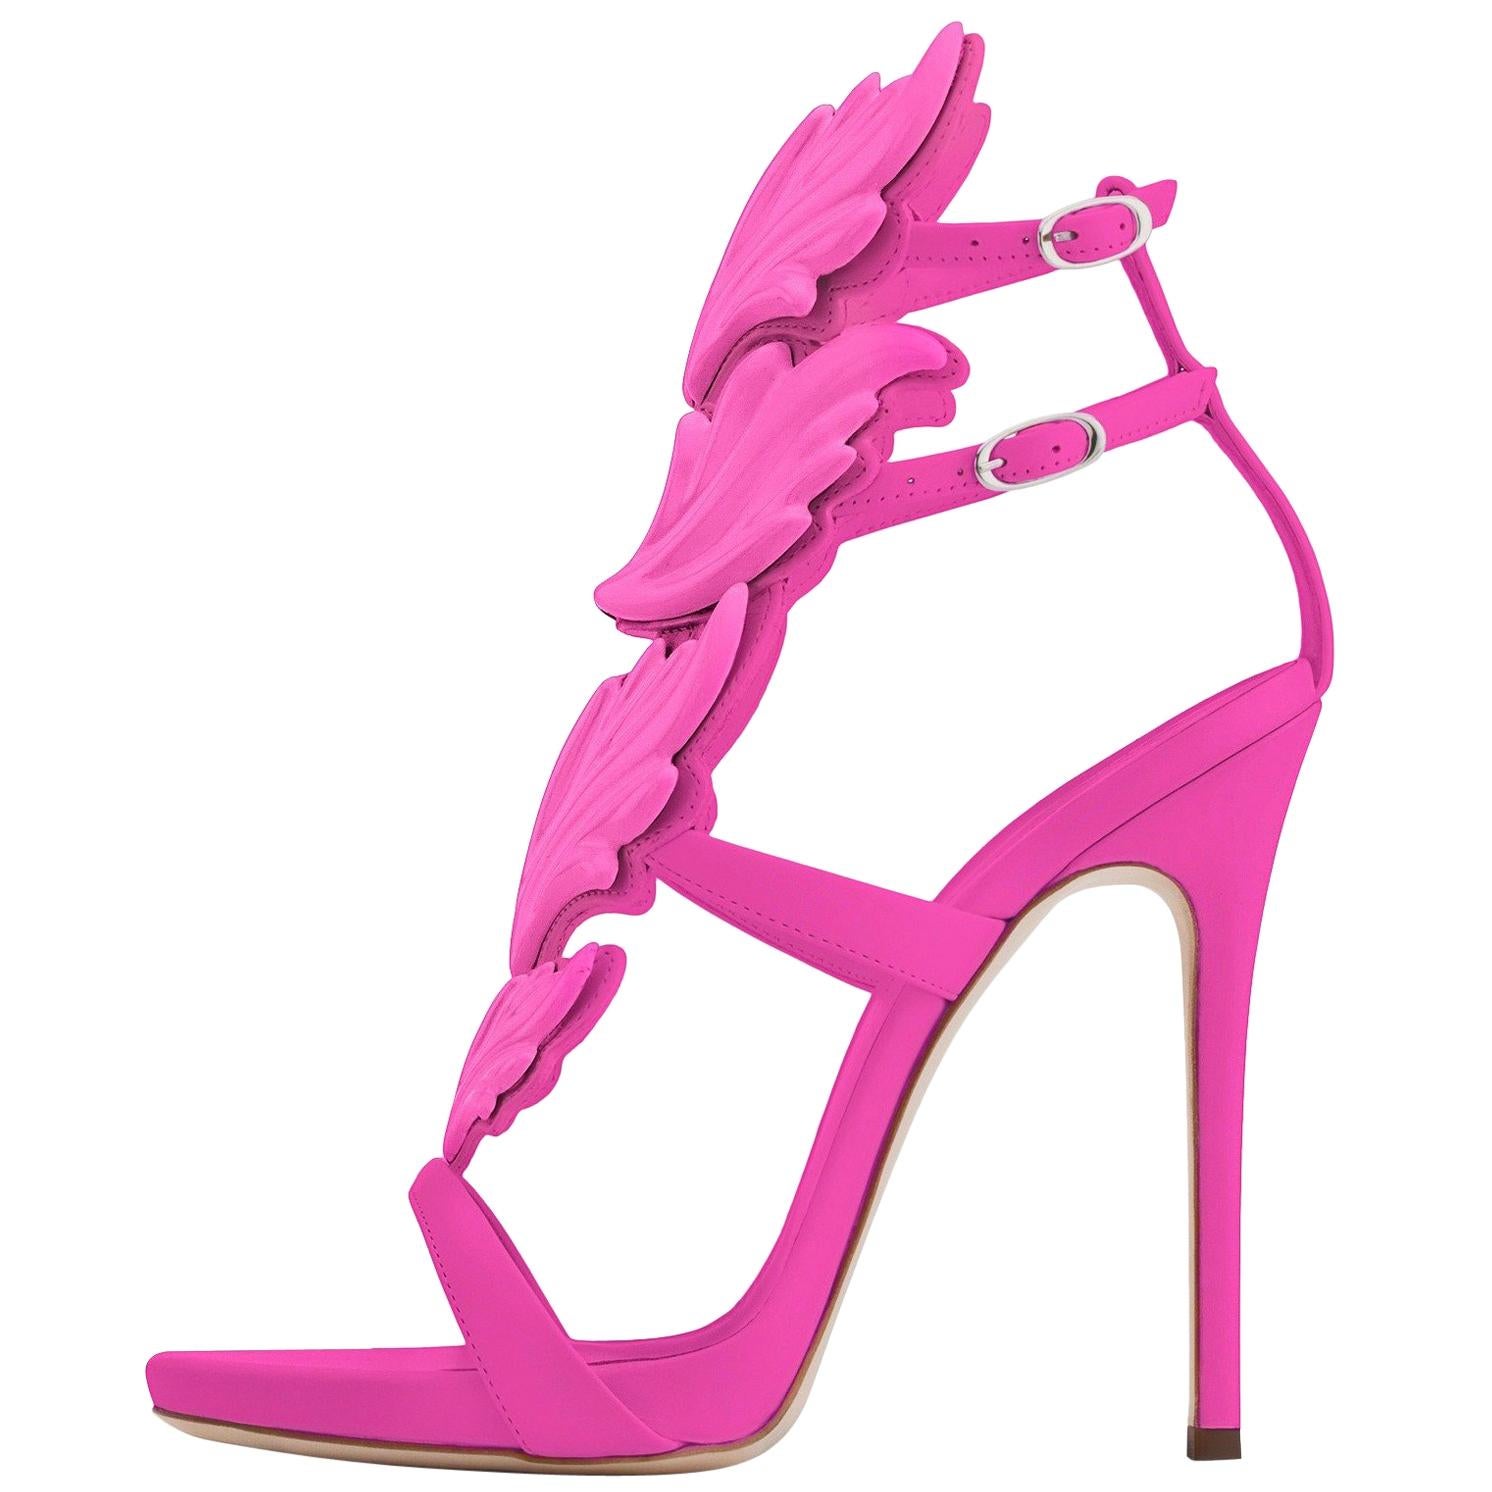 Giuseppe Zanotti NEW Fuchsia Pink Leather Metal Evening Sandals Heels in Box